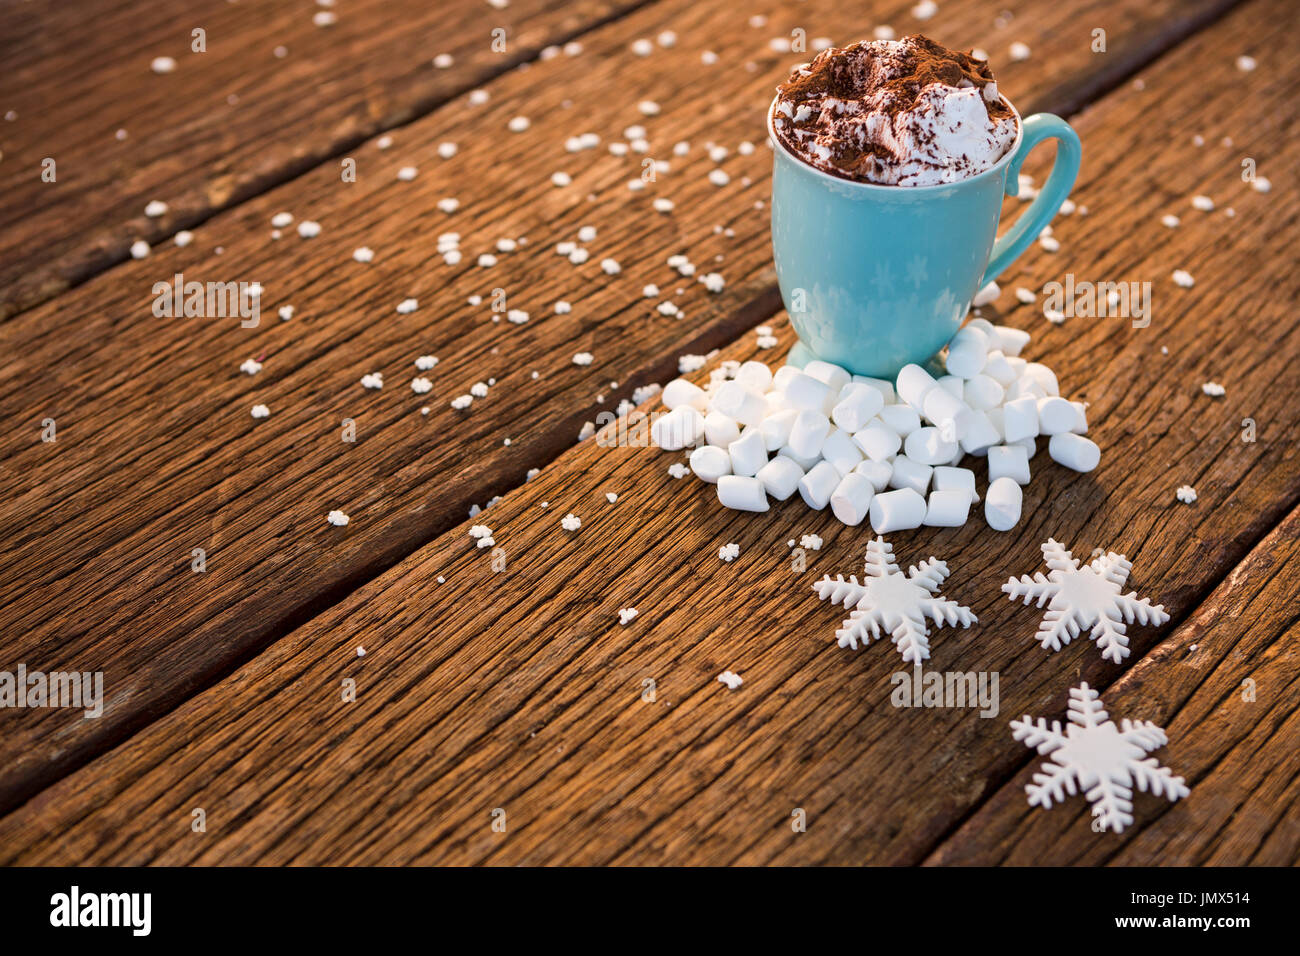 Чашка Кофе На Снегу